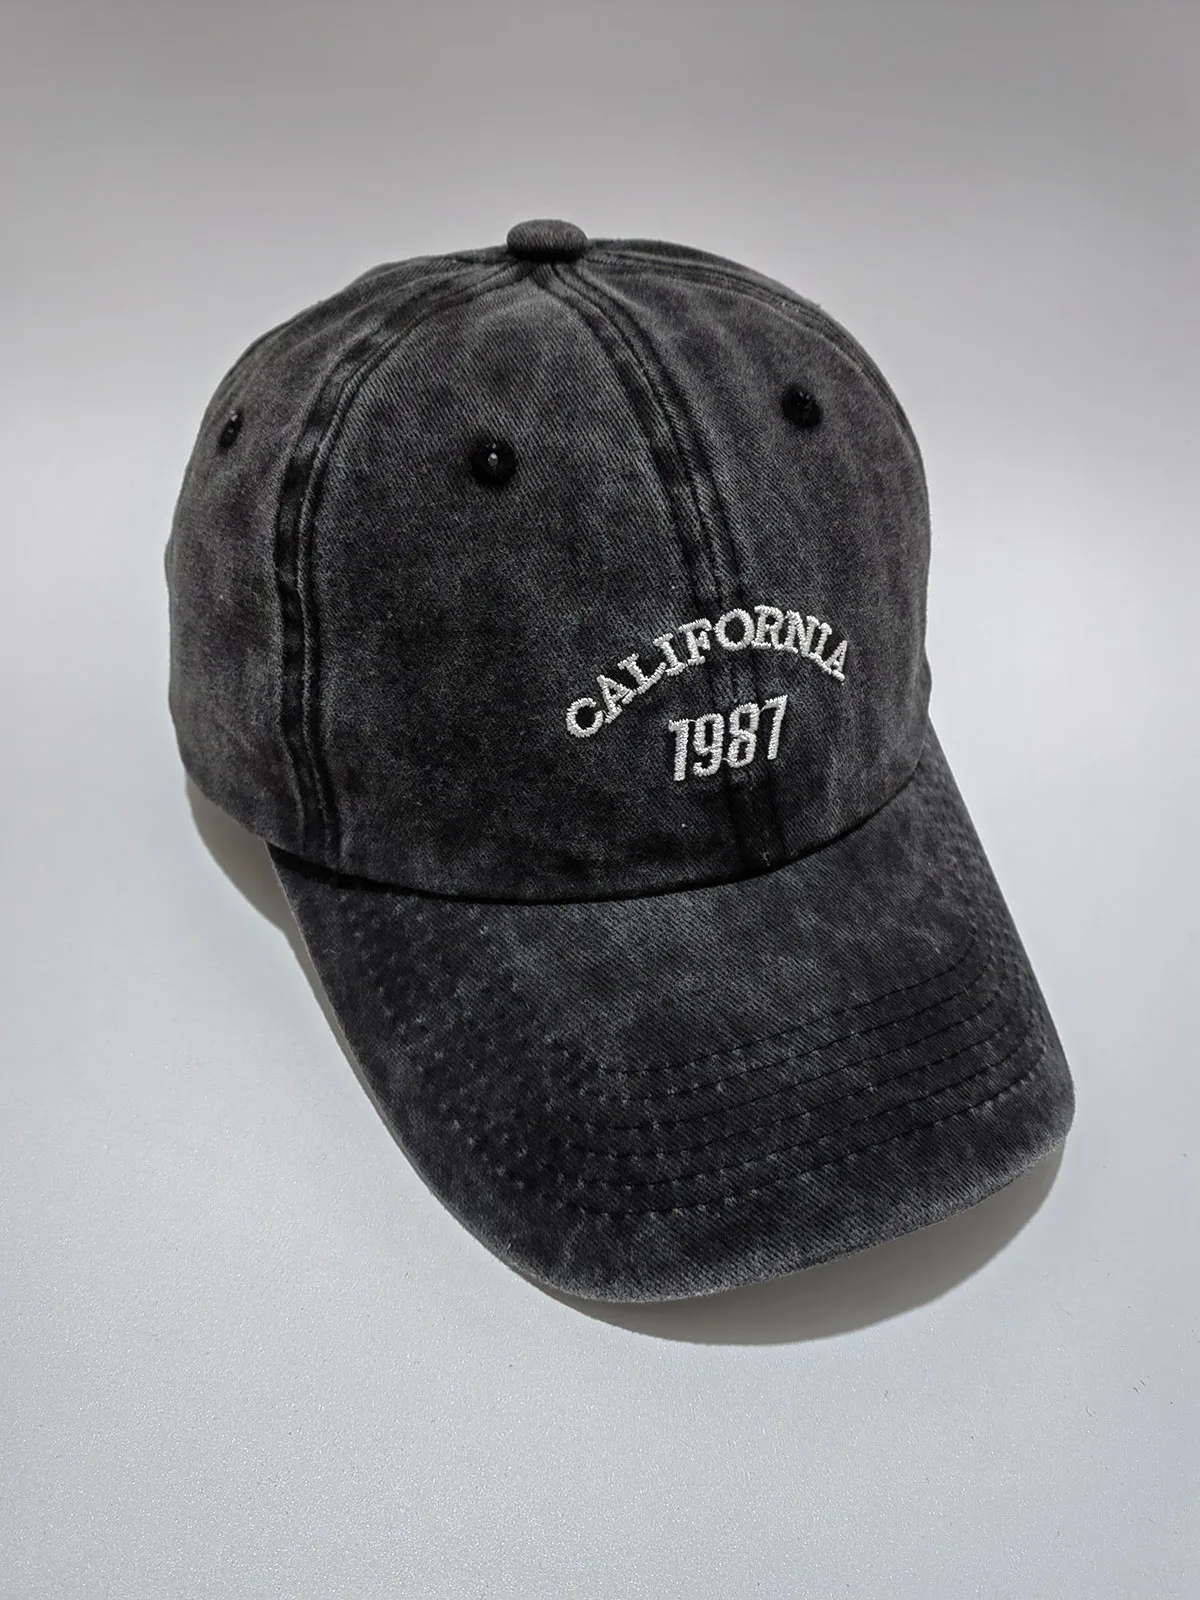 Vintage Do Old Baseball Cap For Men And Women Washed Cotton Letter Embroidery Snapback Hat Spring Summer Soft Top Sun Visor Cap